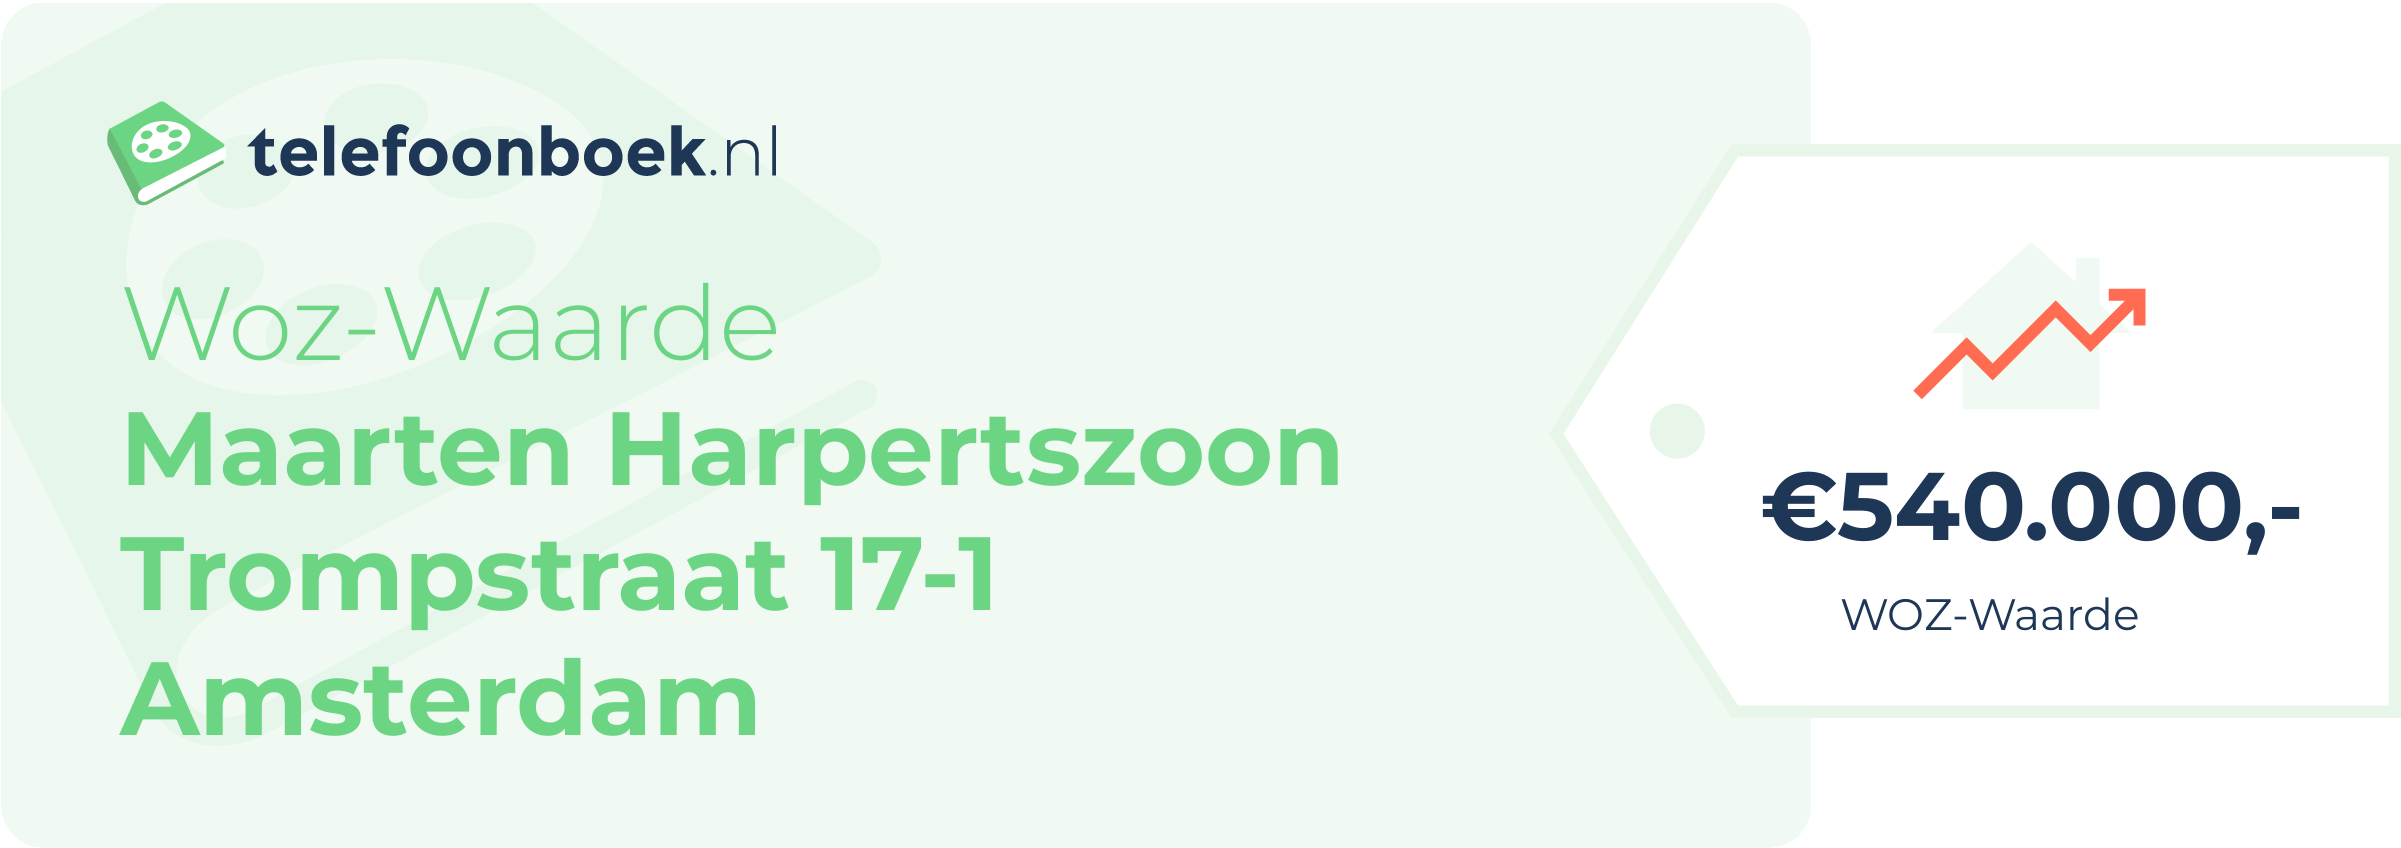 WOZ-waarde Maarten Harpertszoon Trompstraat 17-1 Amsterdam